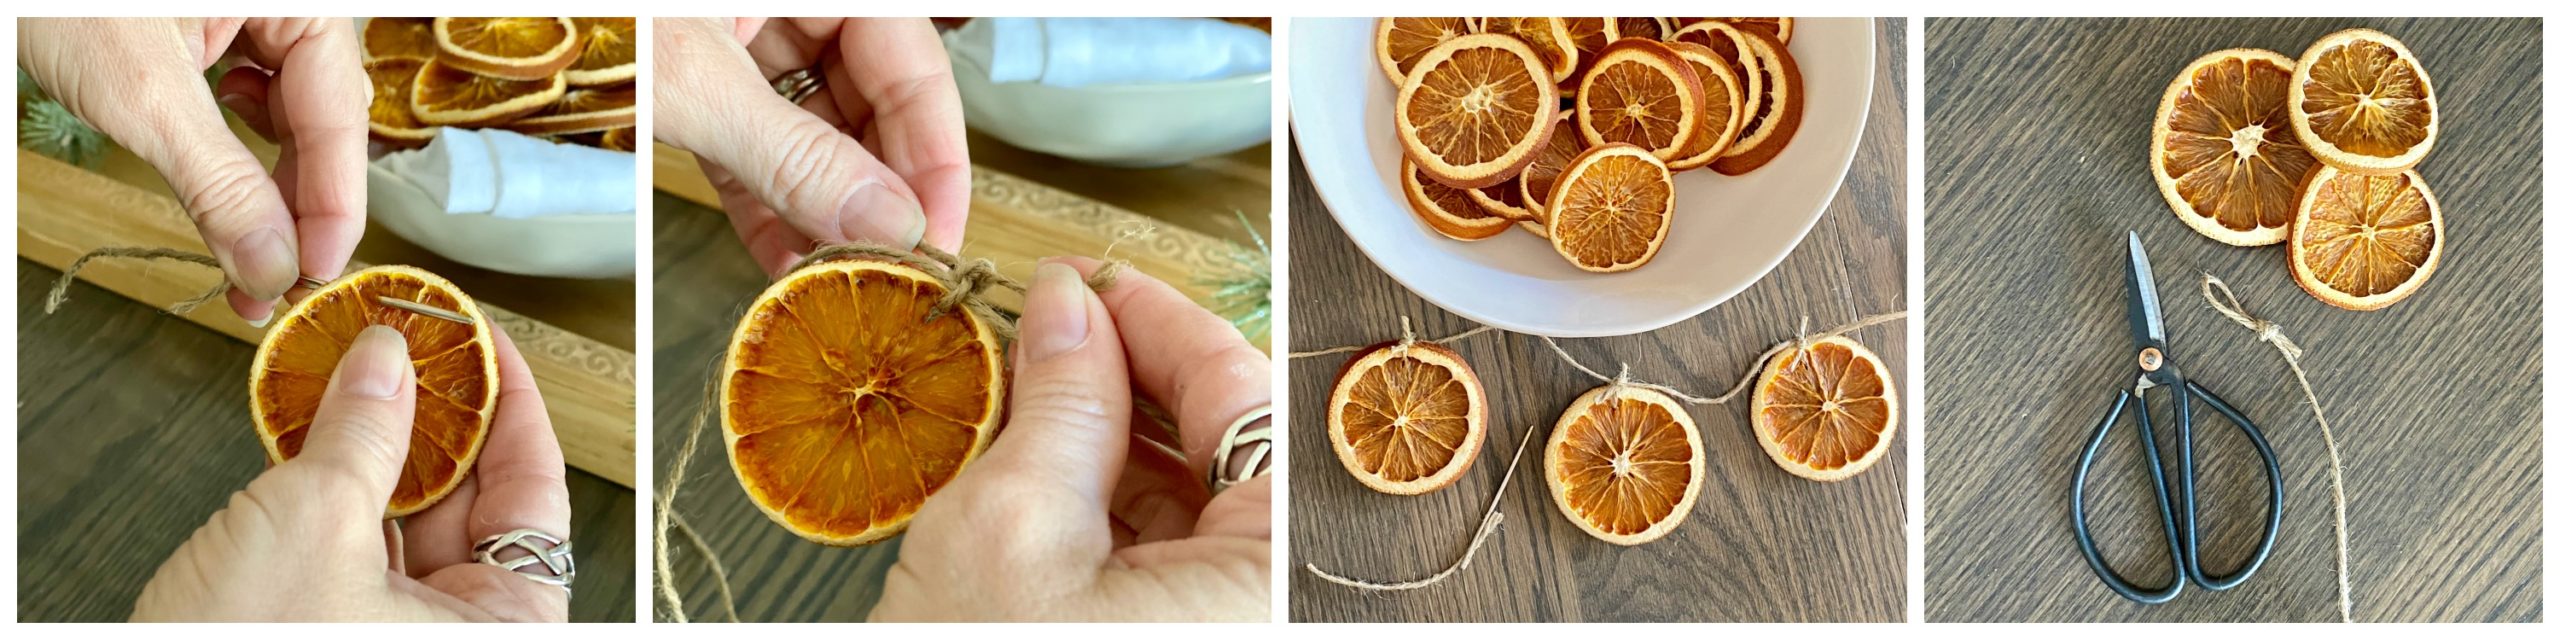 How to Make Dried Orange Garland